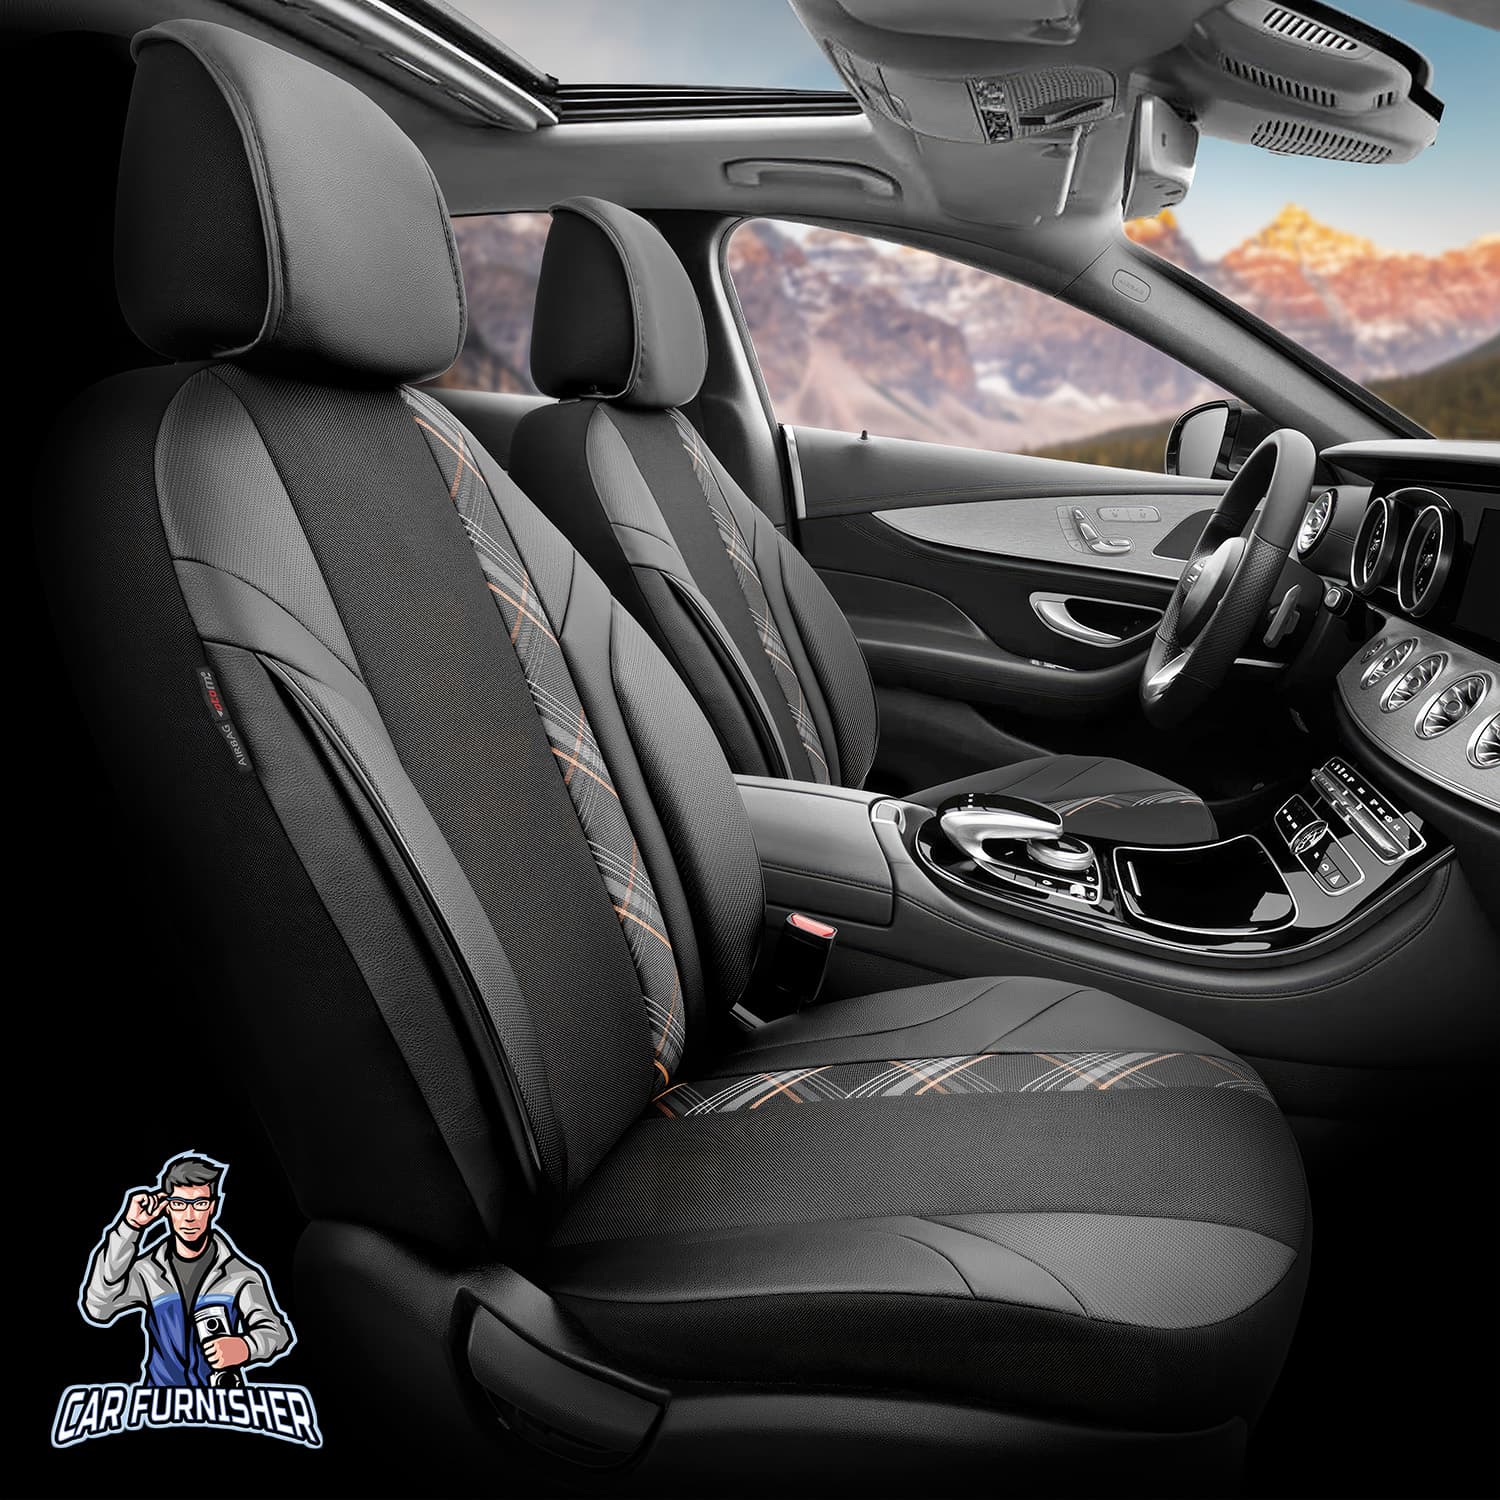 Mercedes 190 Seat Covers Horizon Design Dark Beige 5 Seats + Headrests (Full Set) Leather & Jacquard Fabric